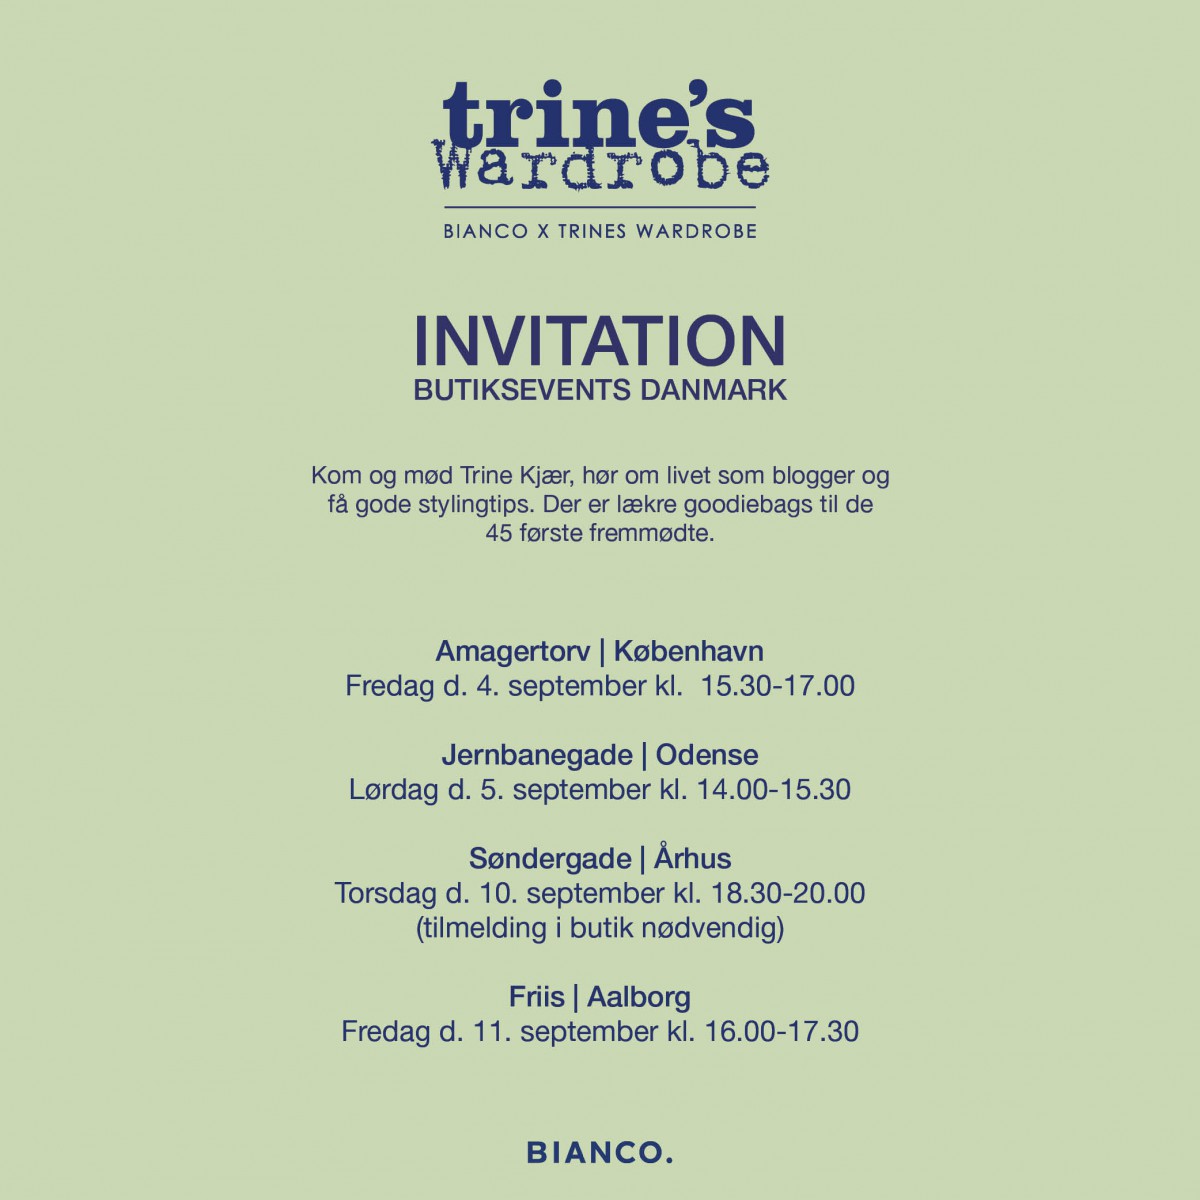 Bianco x Trine's Event Invitation - Trine Kjær